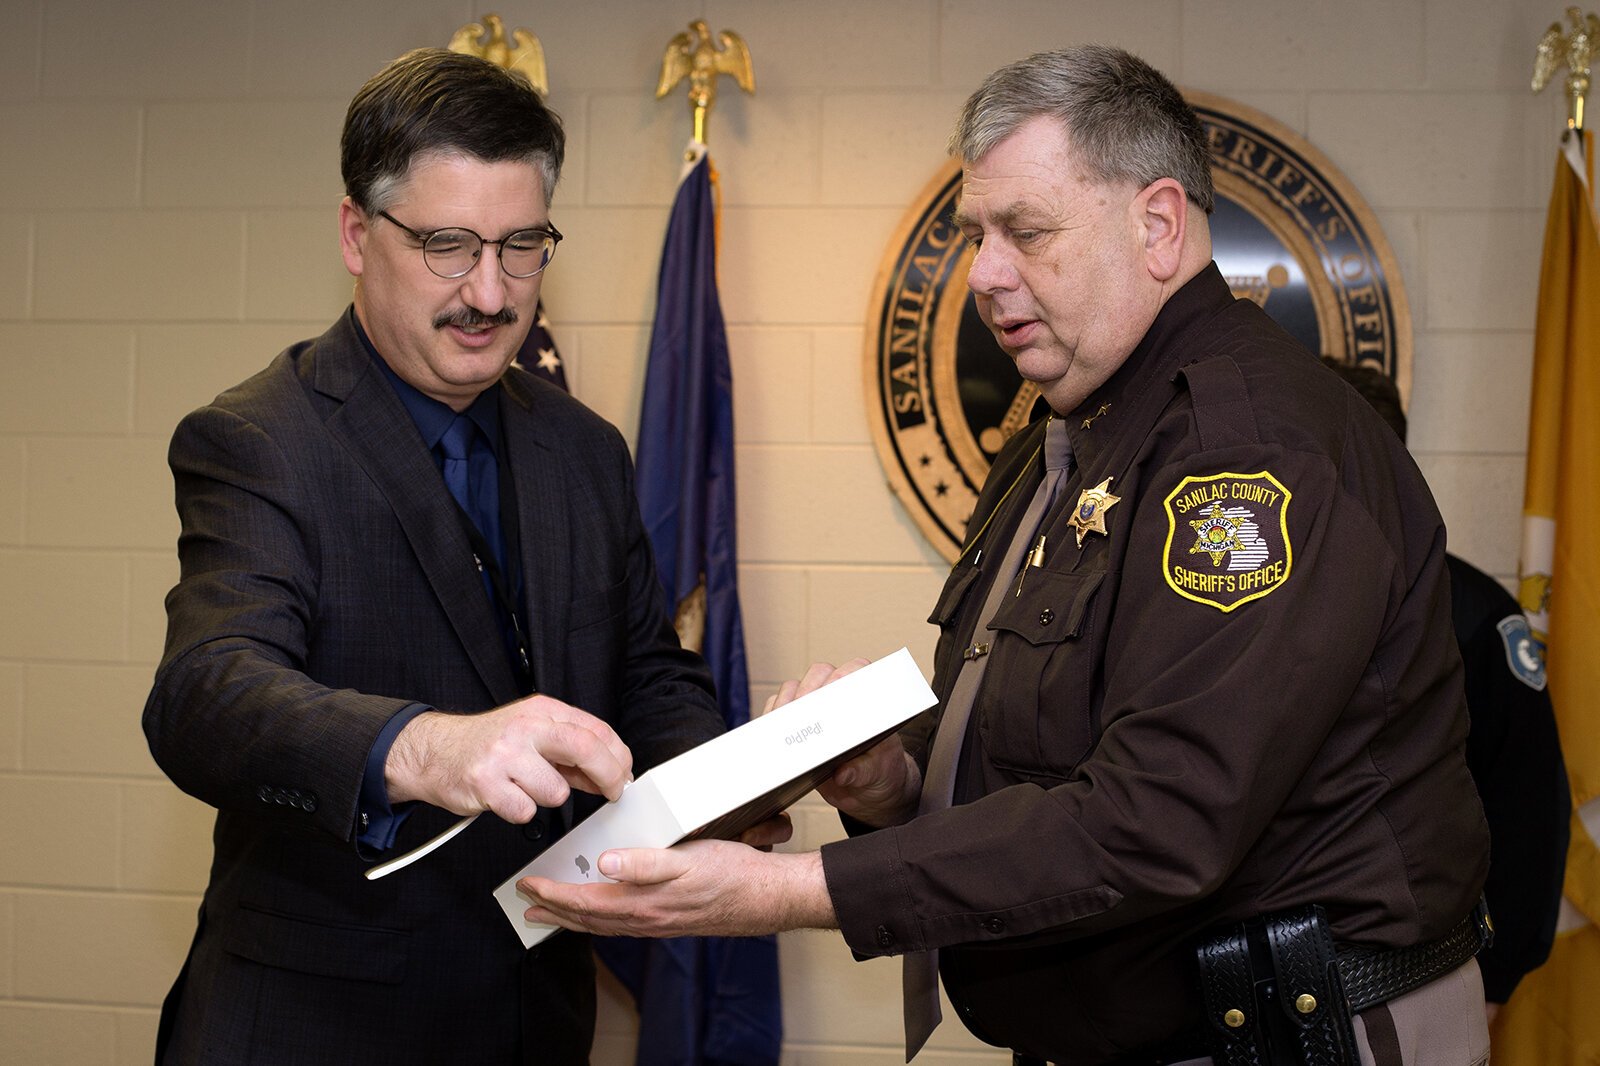 Sanilac County CMH CEO Wilbert Morris presents iPad to Sanilac County Sheriff Paul Rich